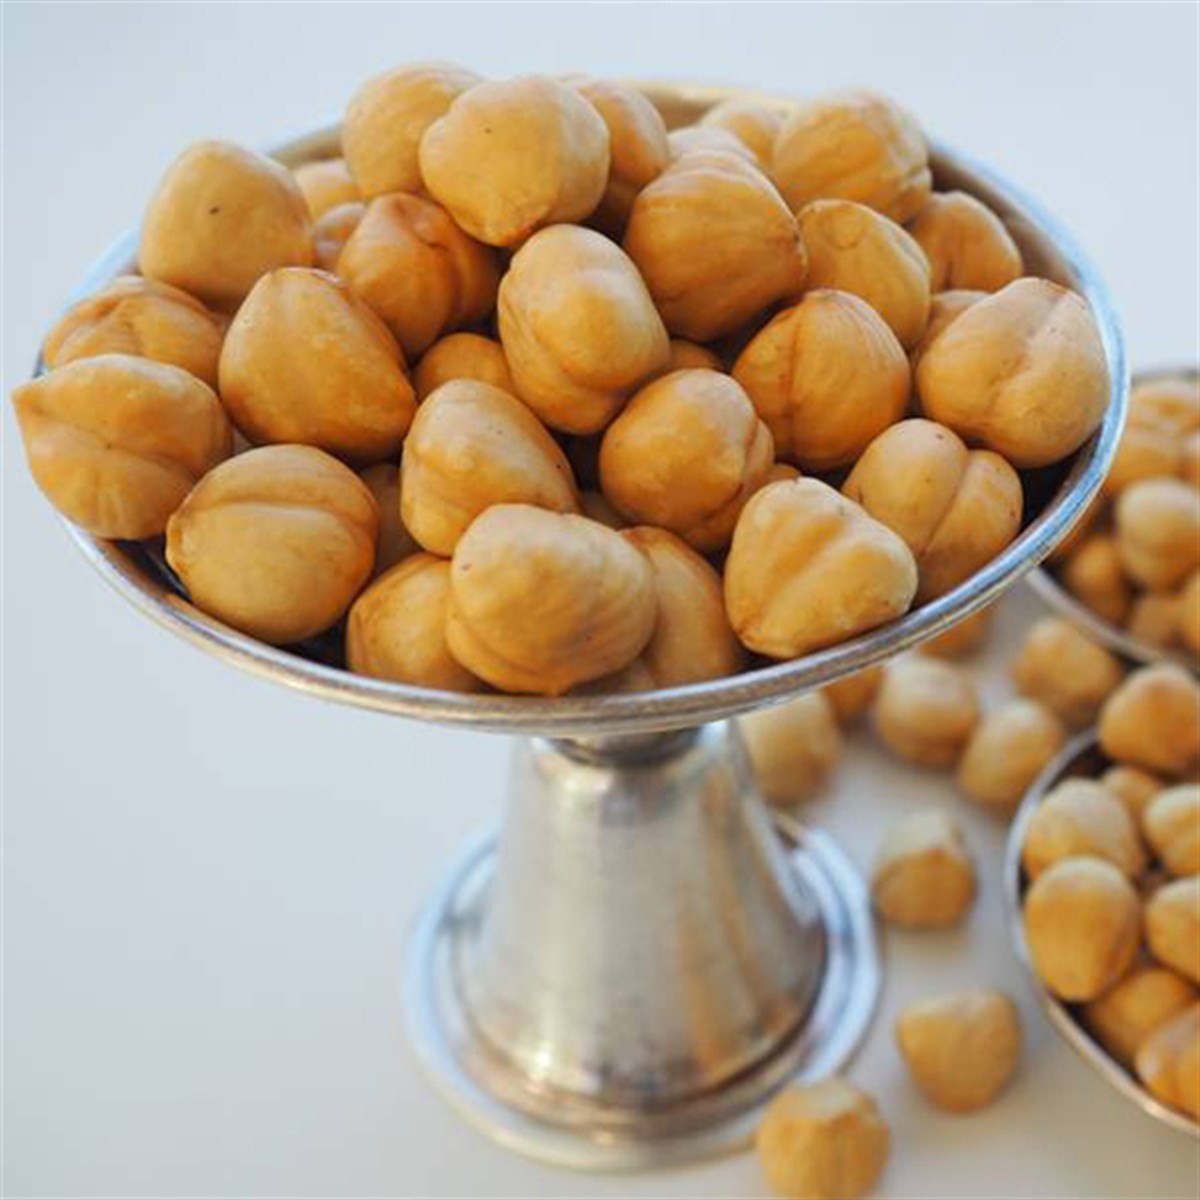 Giresun Roasted Hazelnuts (13-15 millimeters)